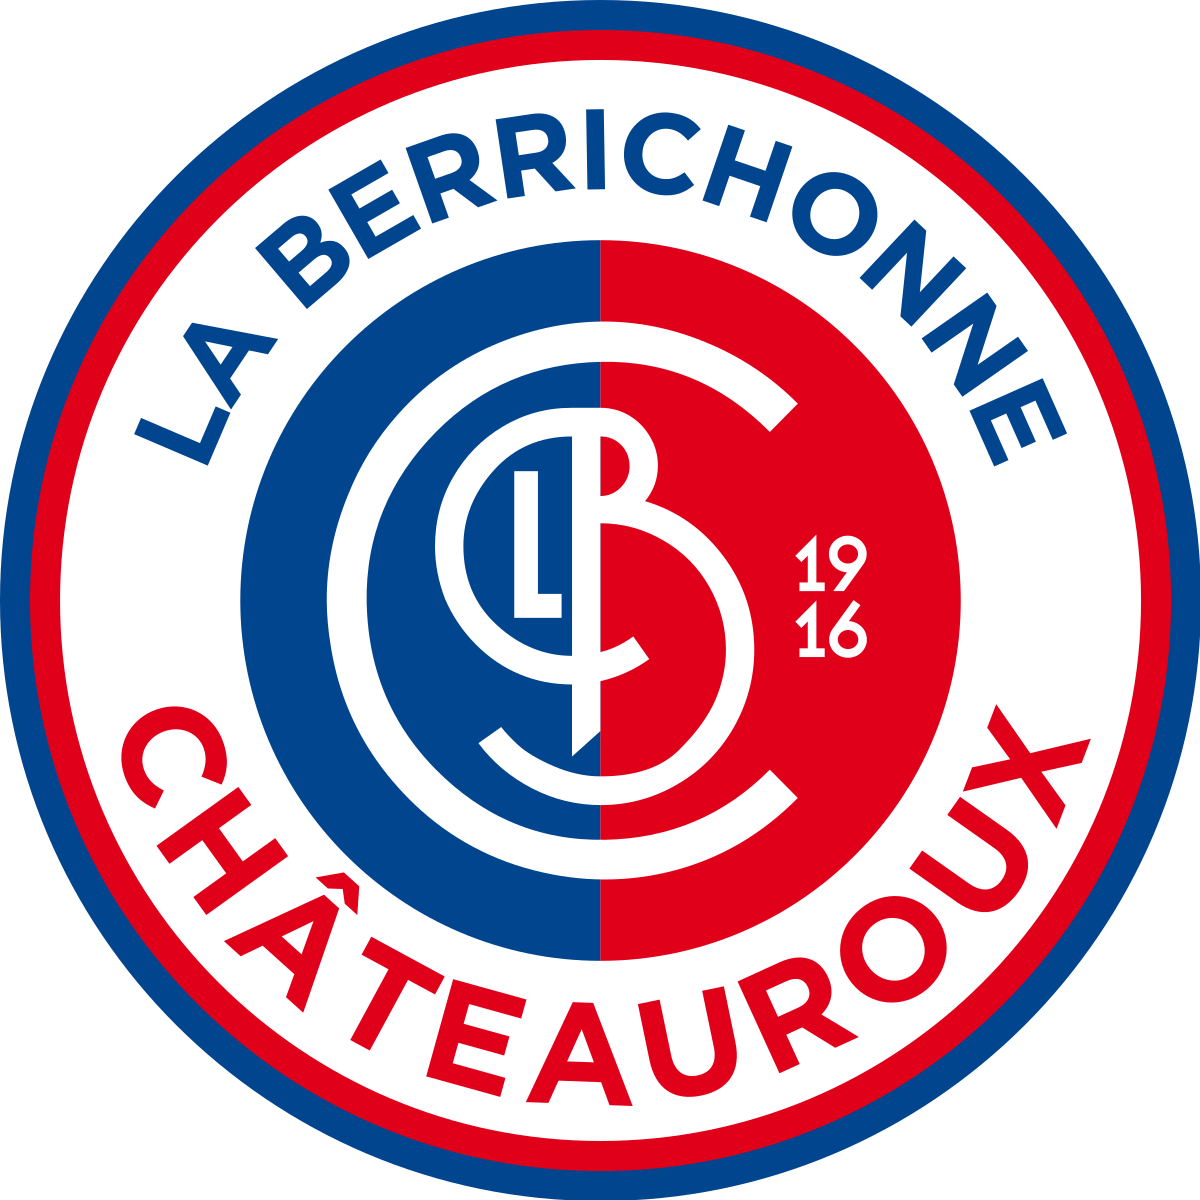 1200px-LB_Chateauroux_logo.svg.png